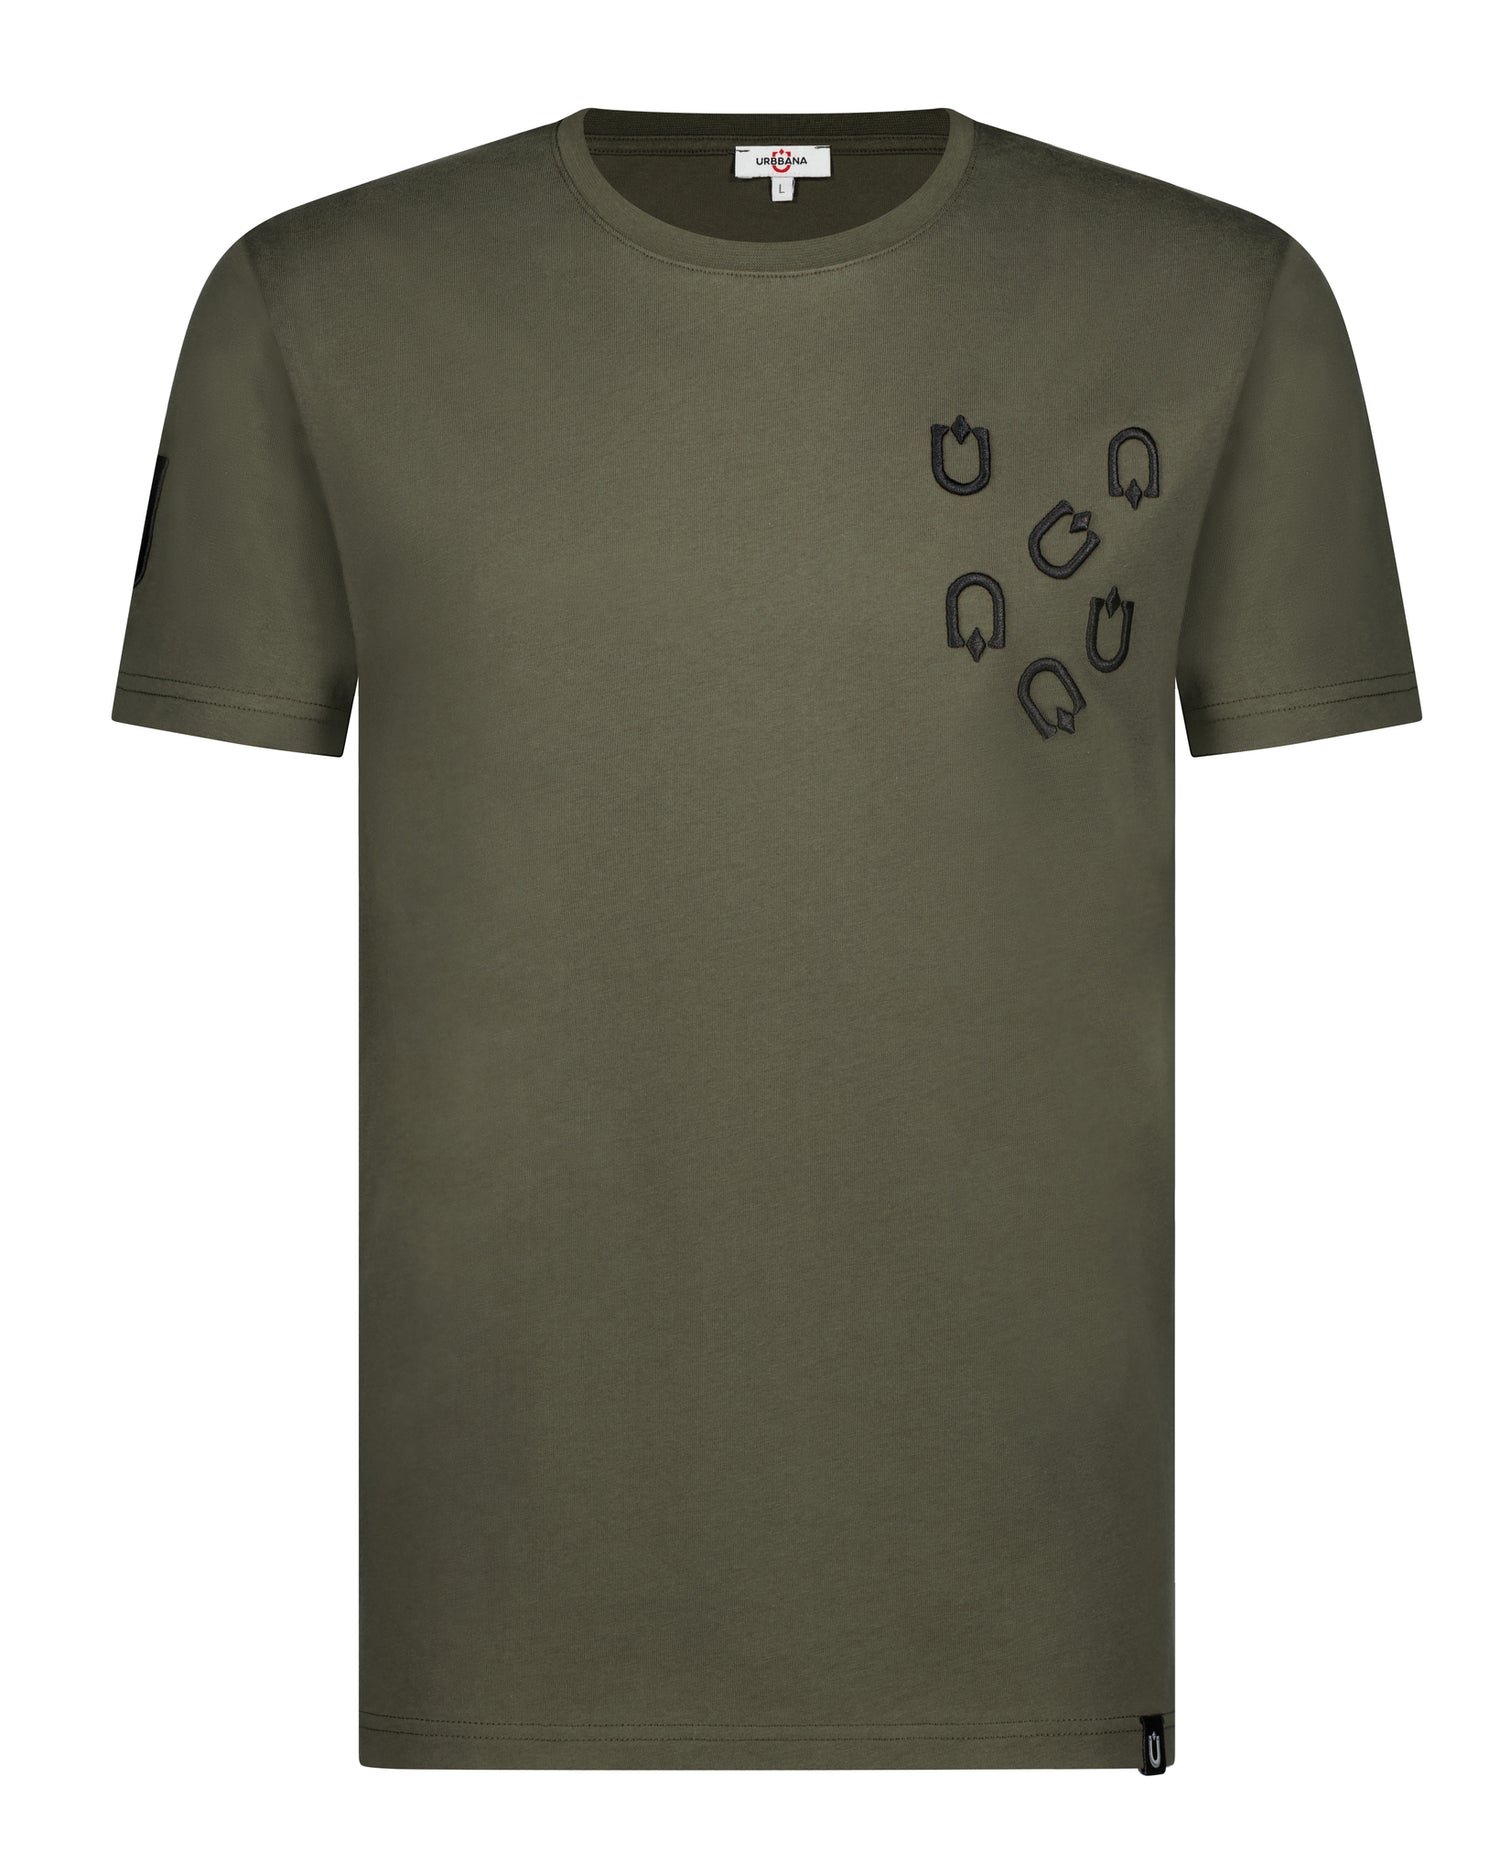 Fine Cotton T-shirt with Multi U Embroidery - Khaki Green